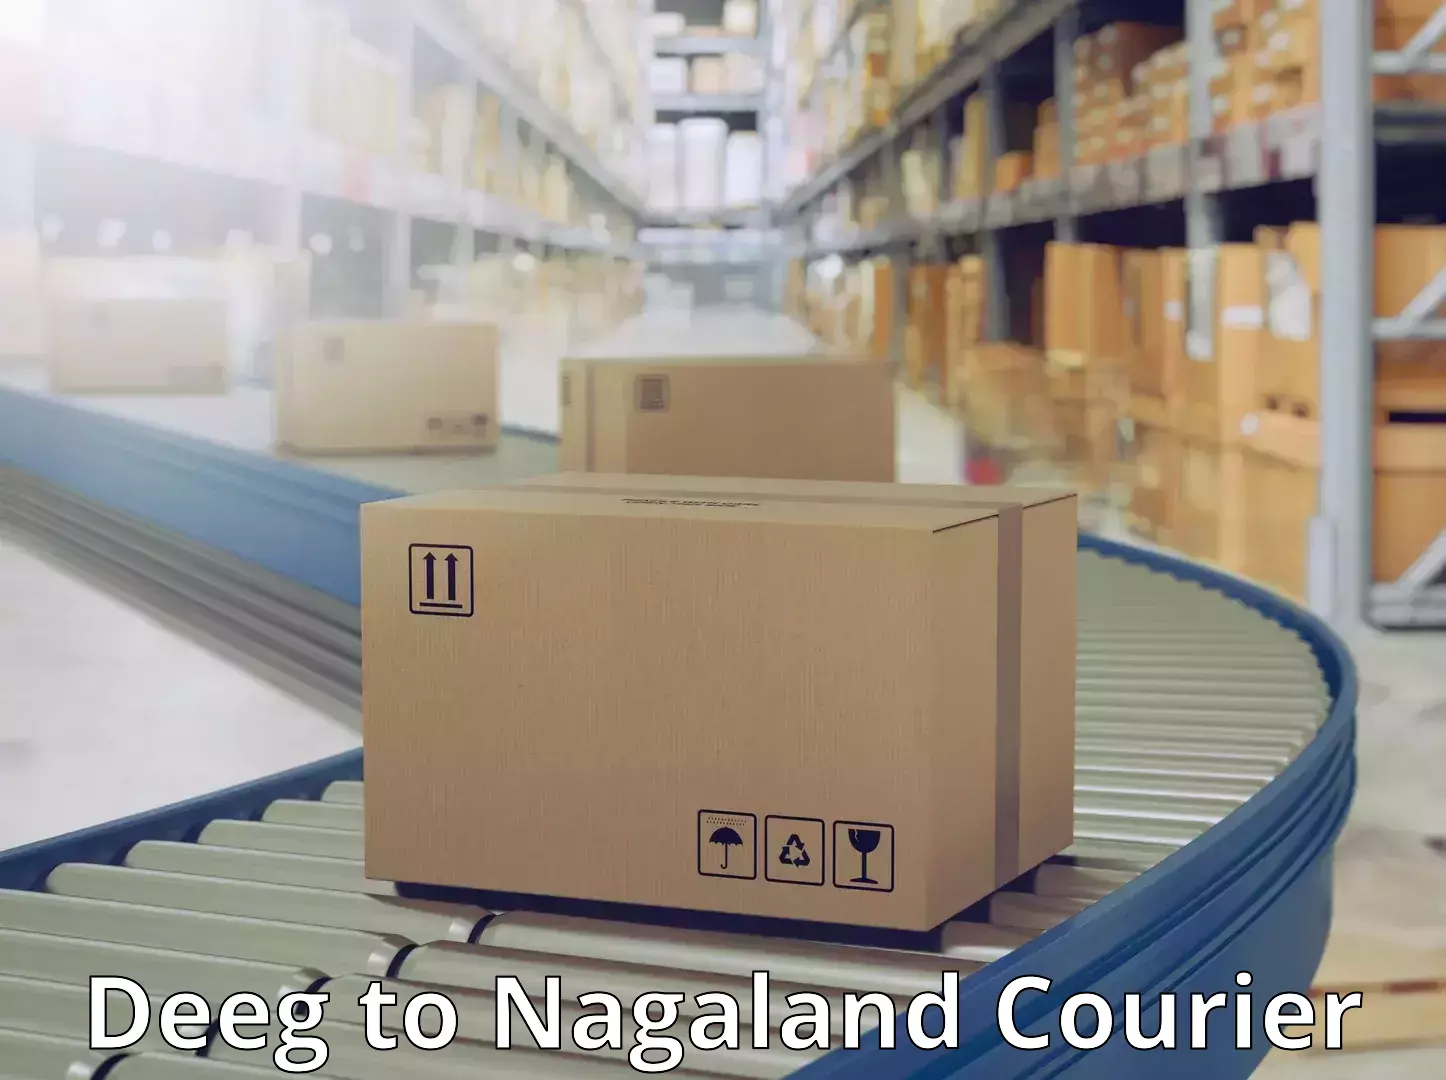 Doorstep delivery service Deeg to Nagaland